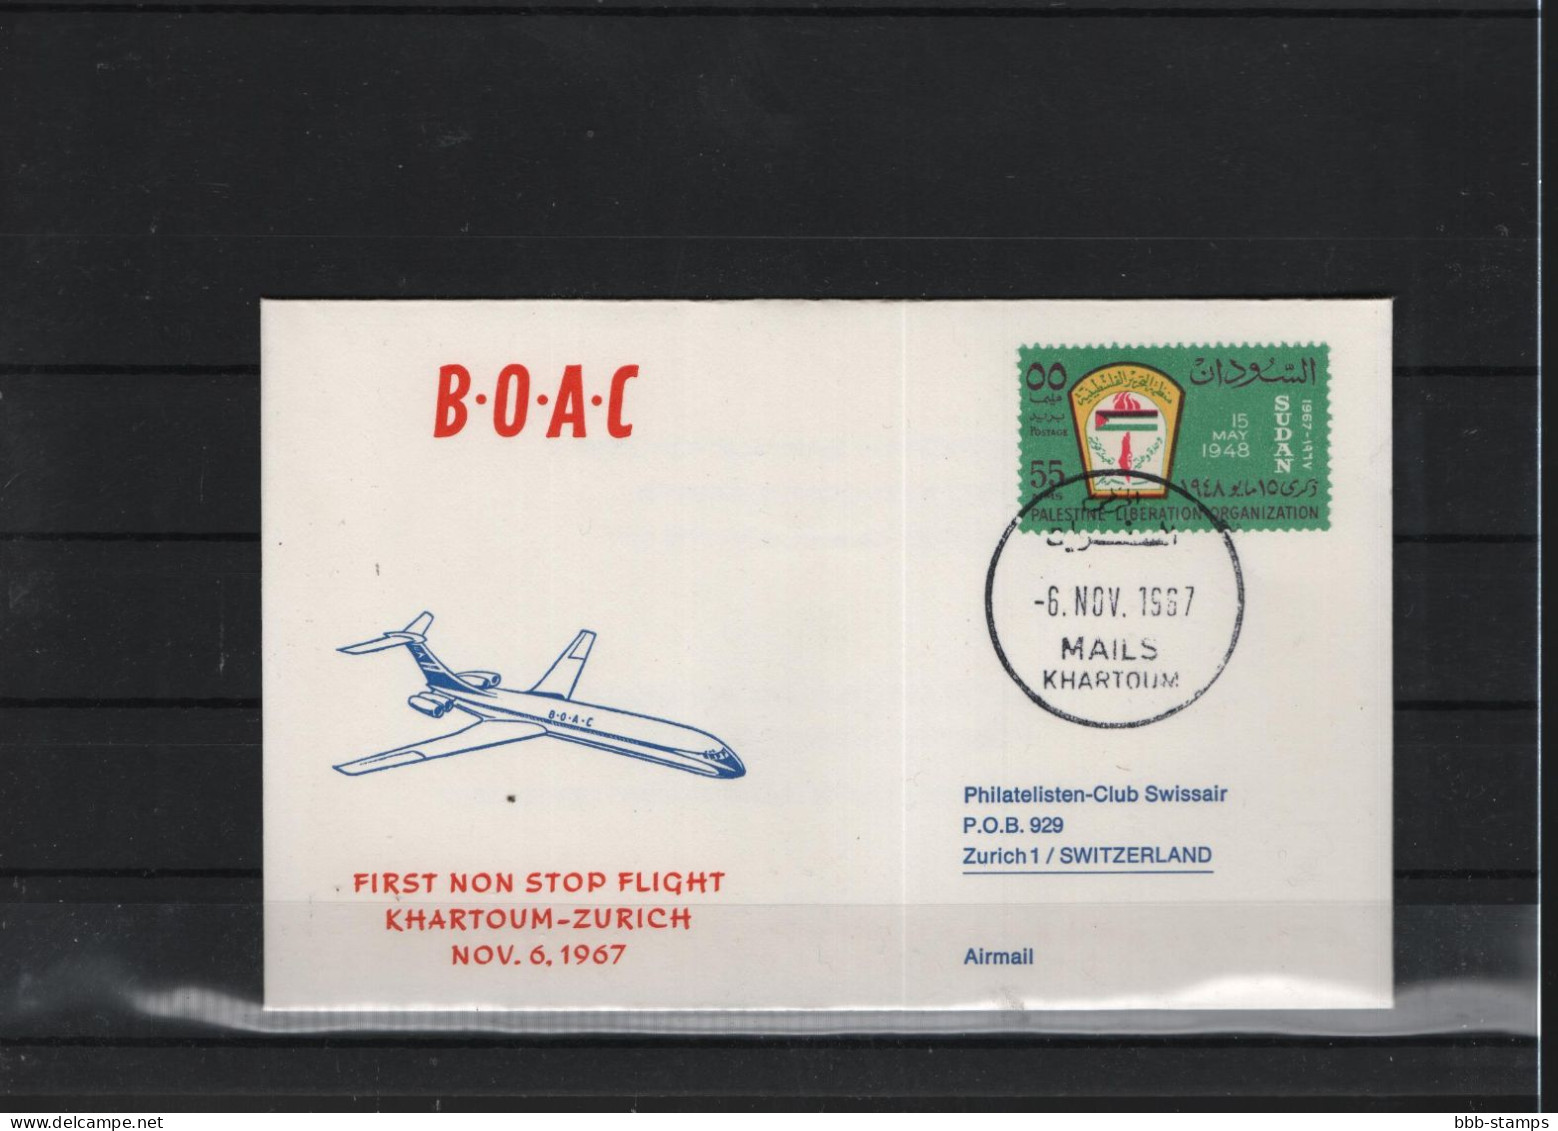 Schweiz Luftpost FFC BOAC 6.11.1967 Khartoum - Zürich - Primi Voli